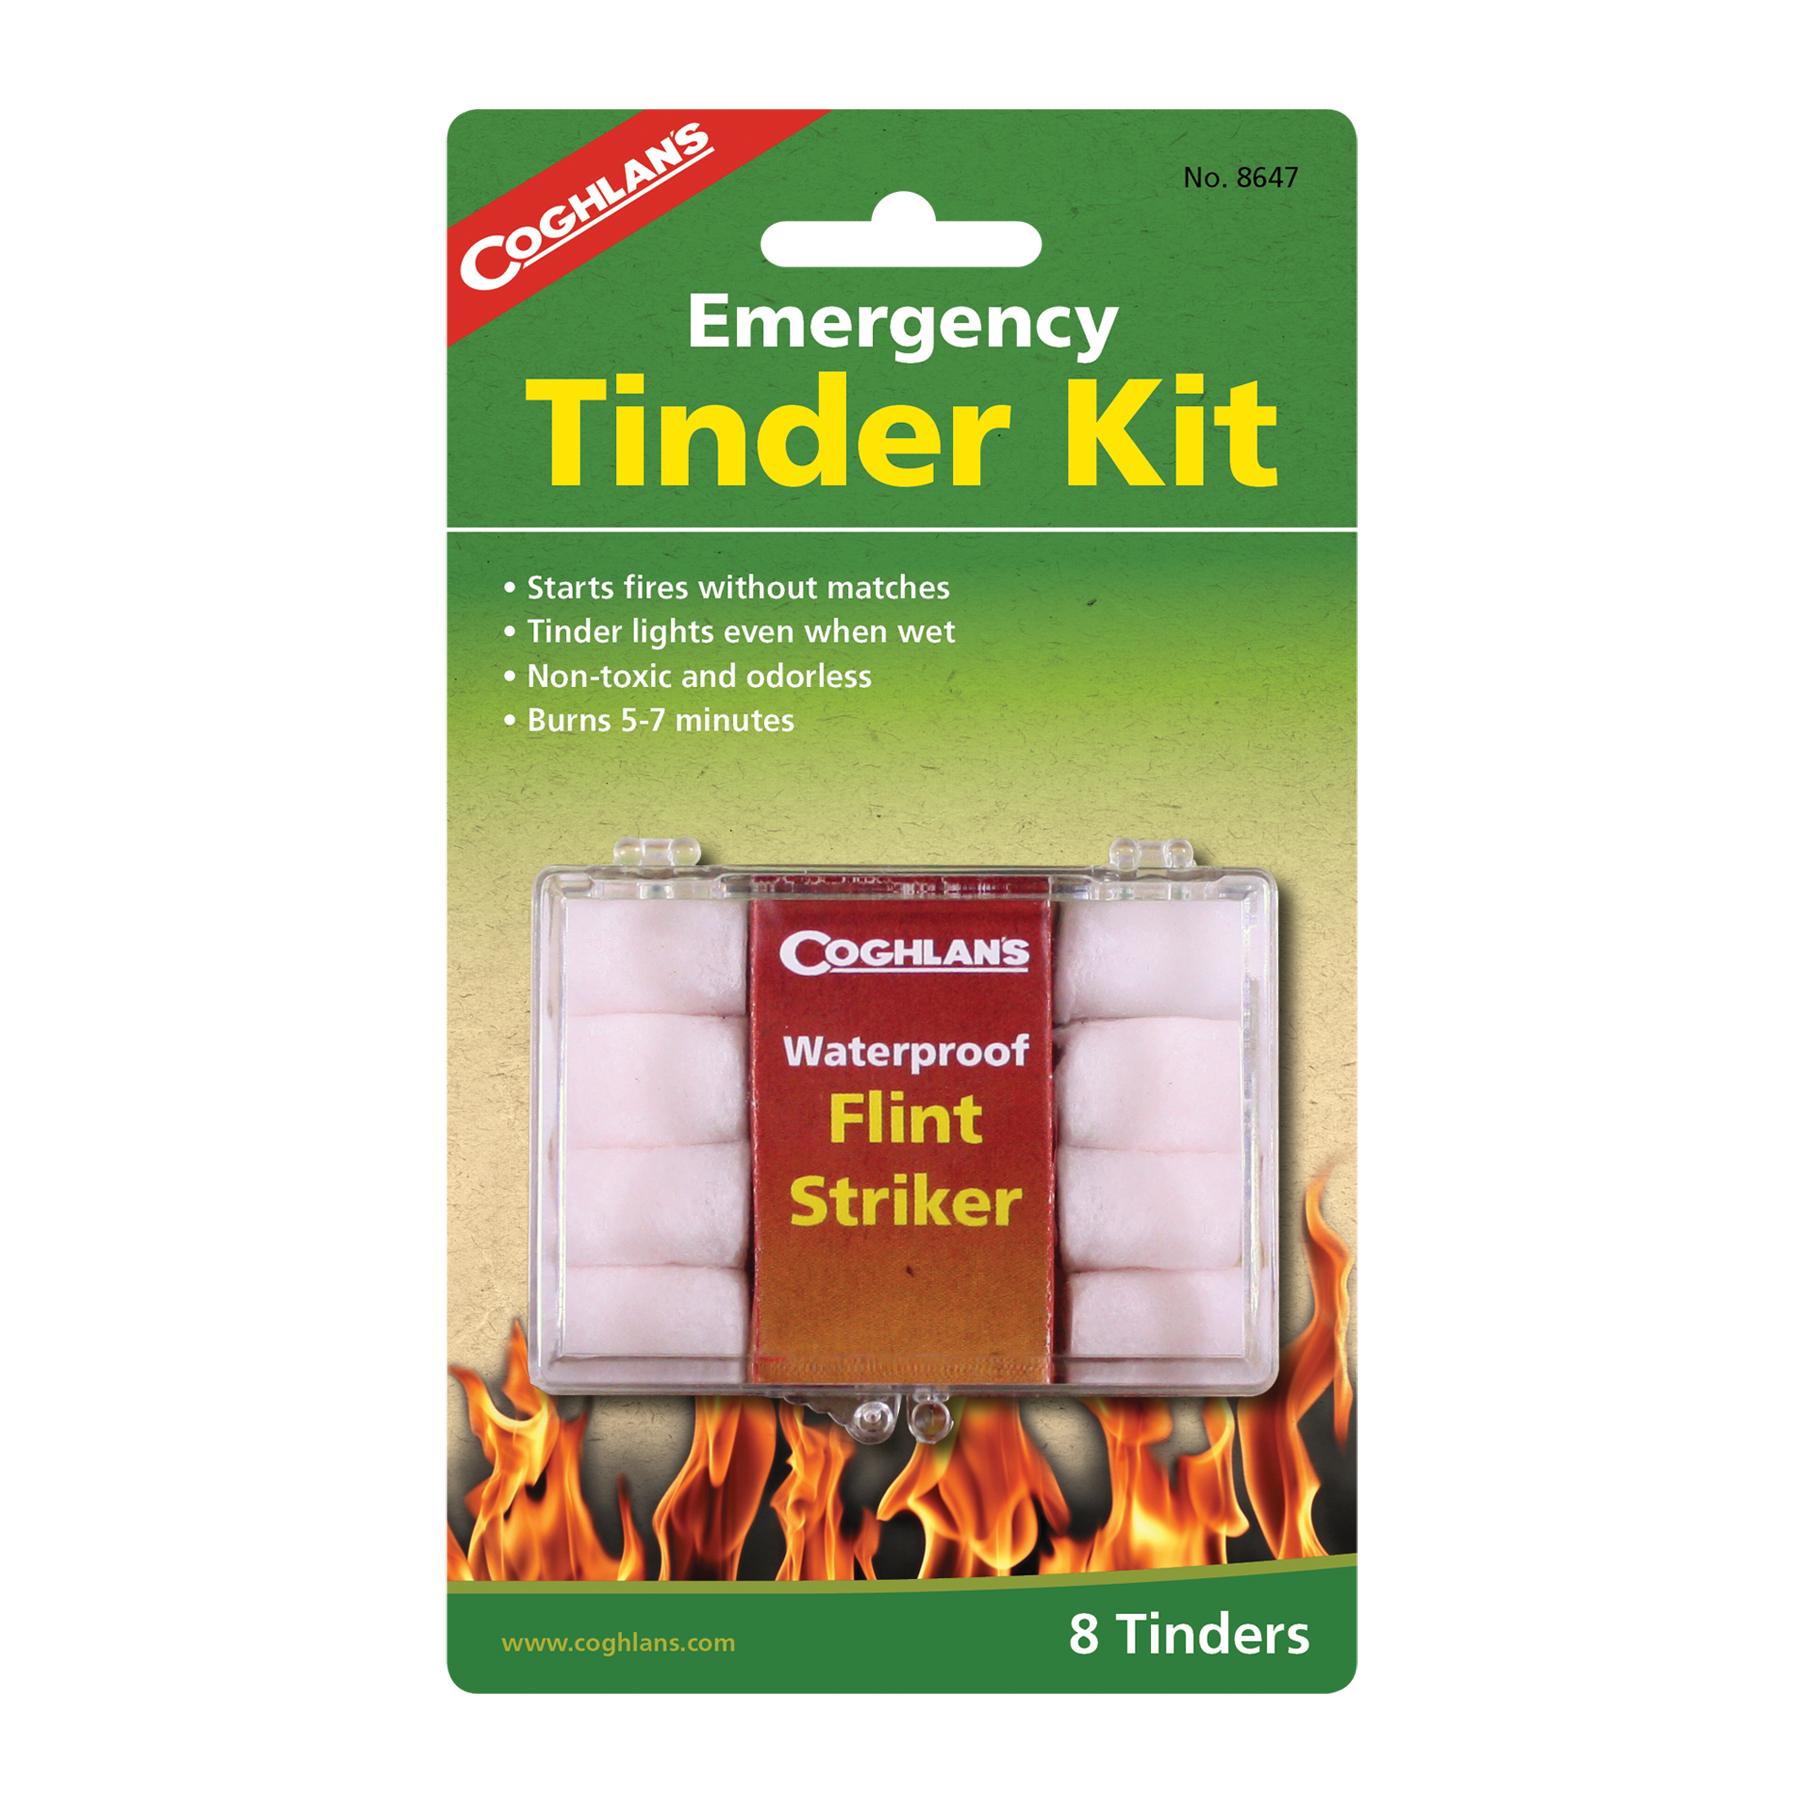  Emergency Tinder Kit